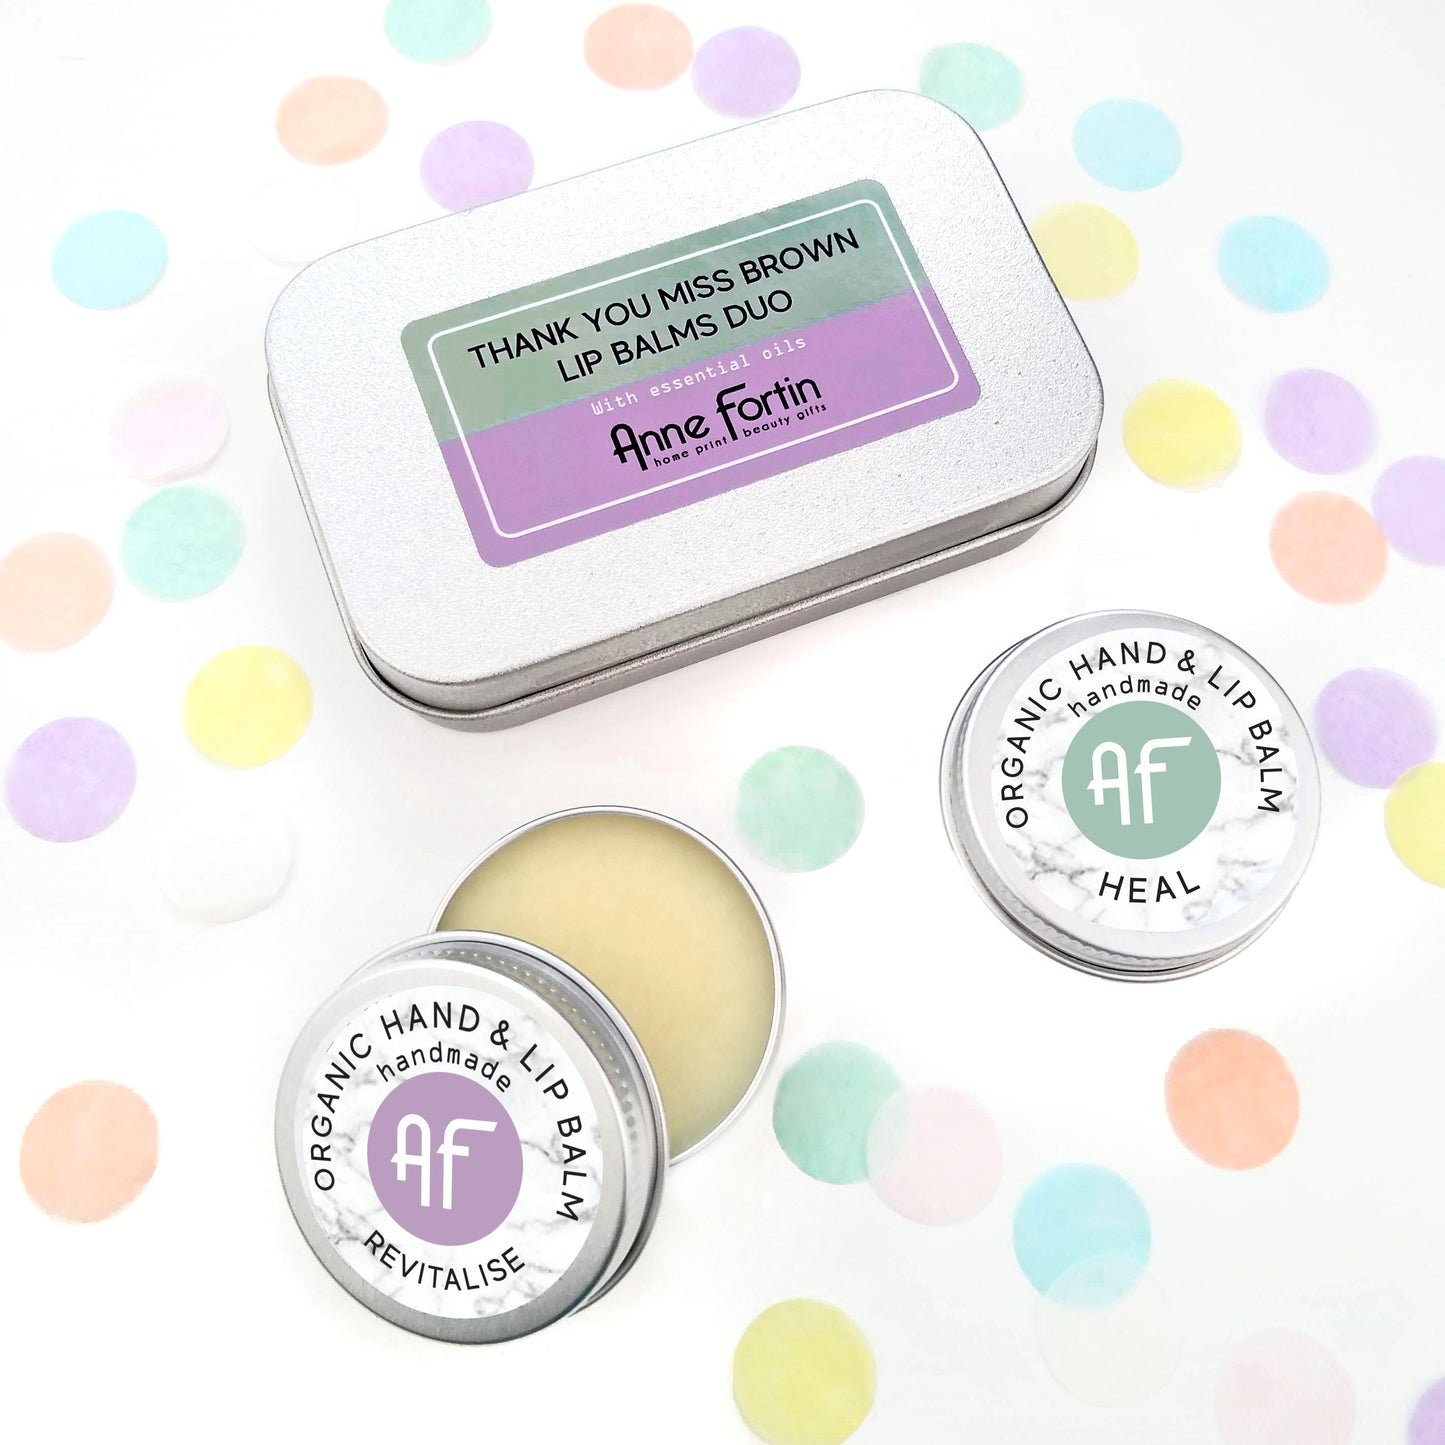 Personalised Organic Lip Balm Duo Gift Set